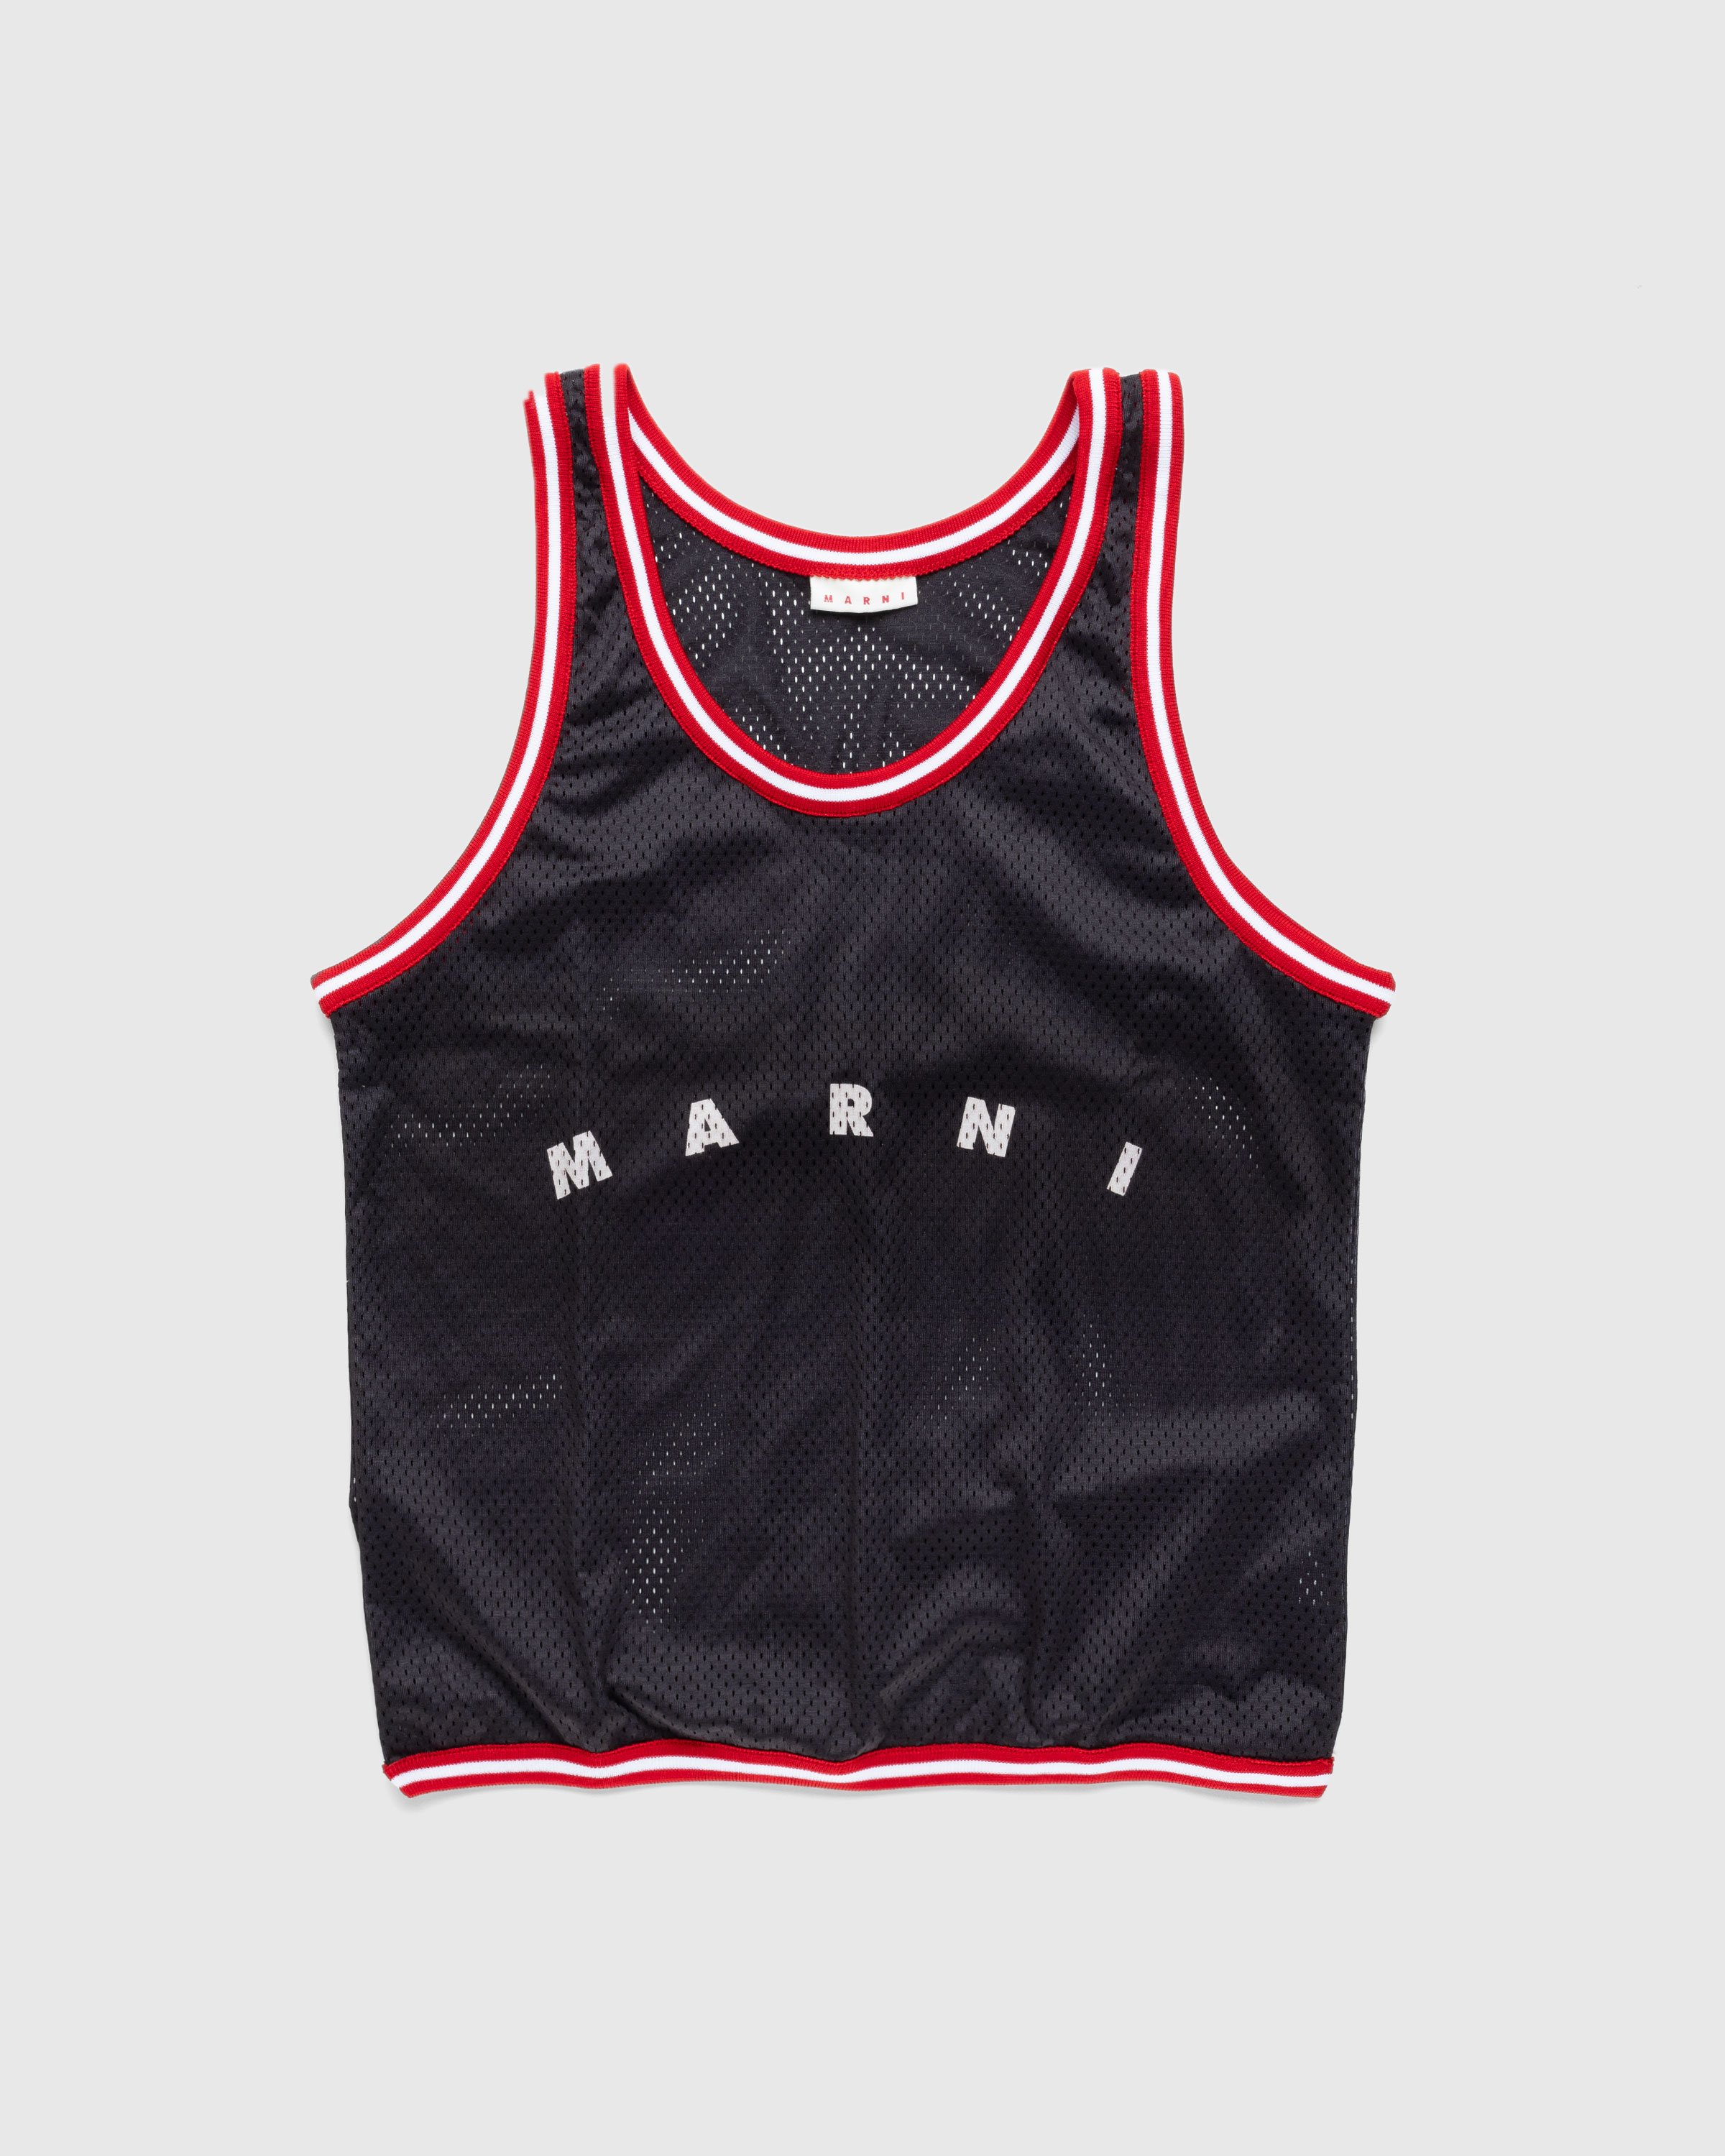 Marni - Basket Tank Top Shopping Bag Black - Accessories - Black - Image 1